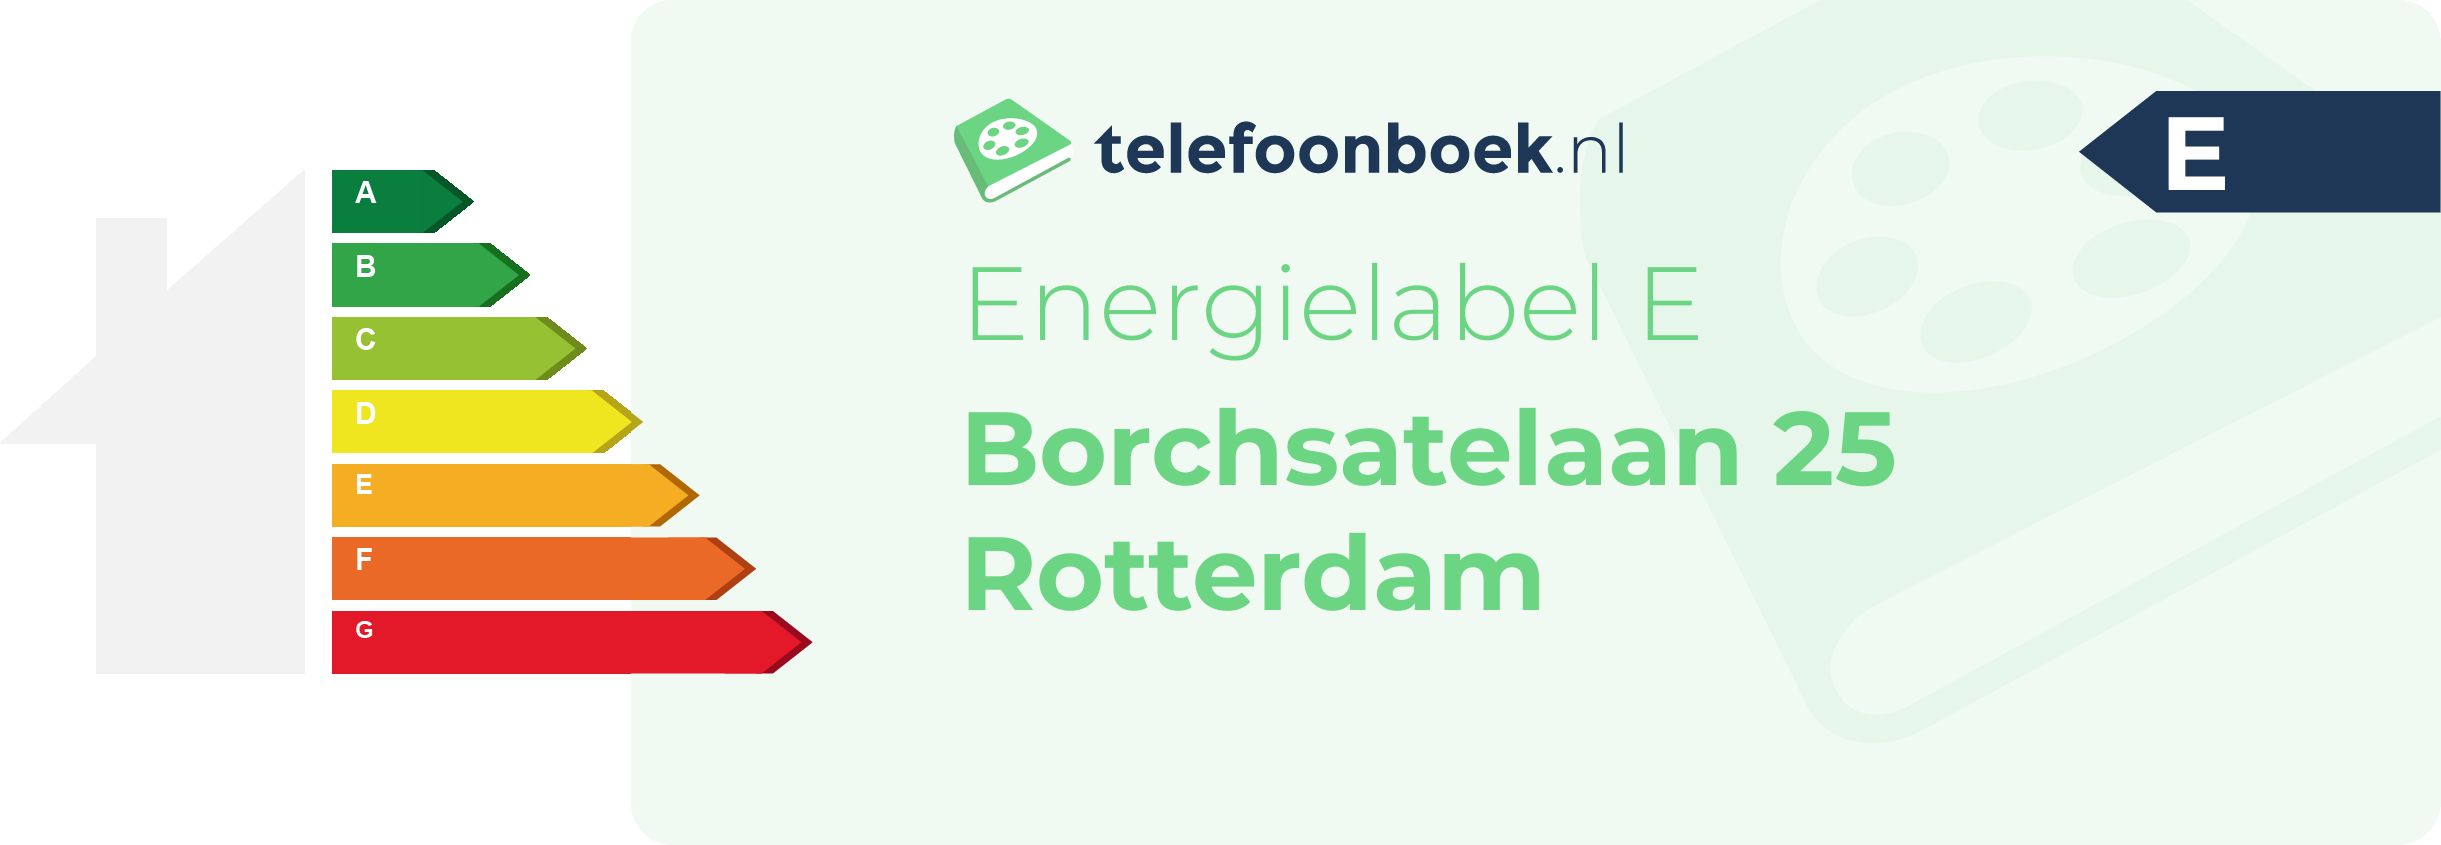 Energielabel Borchsatelaan 25 Rotterdam